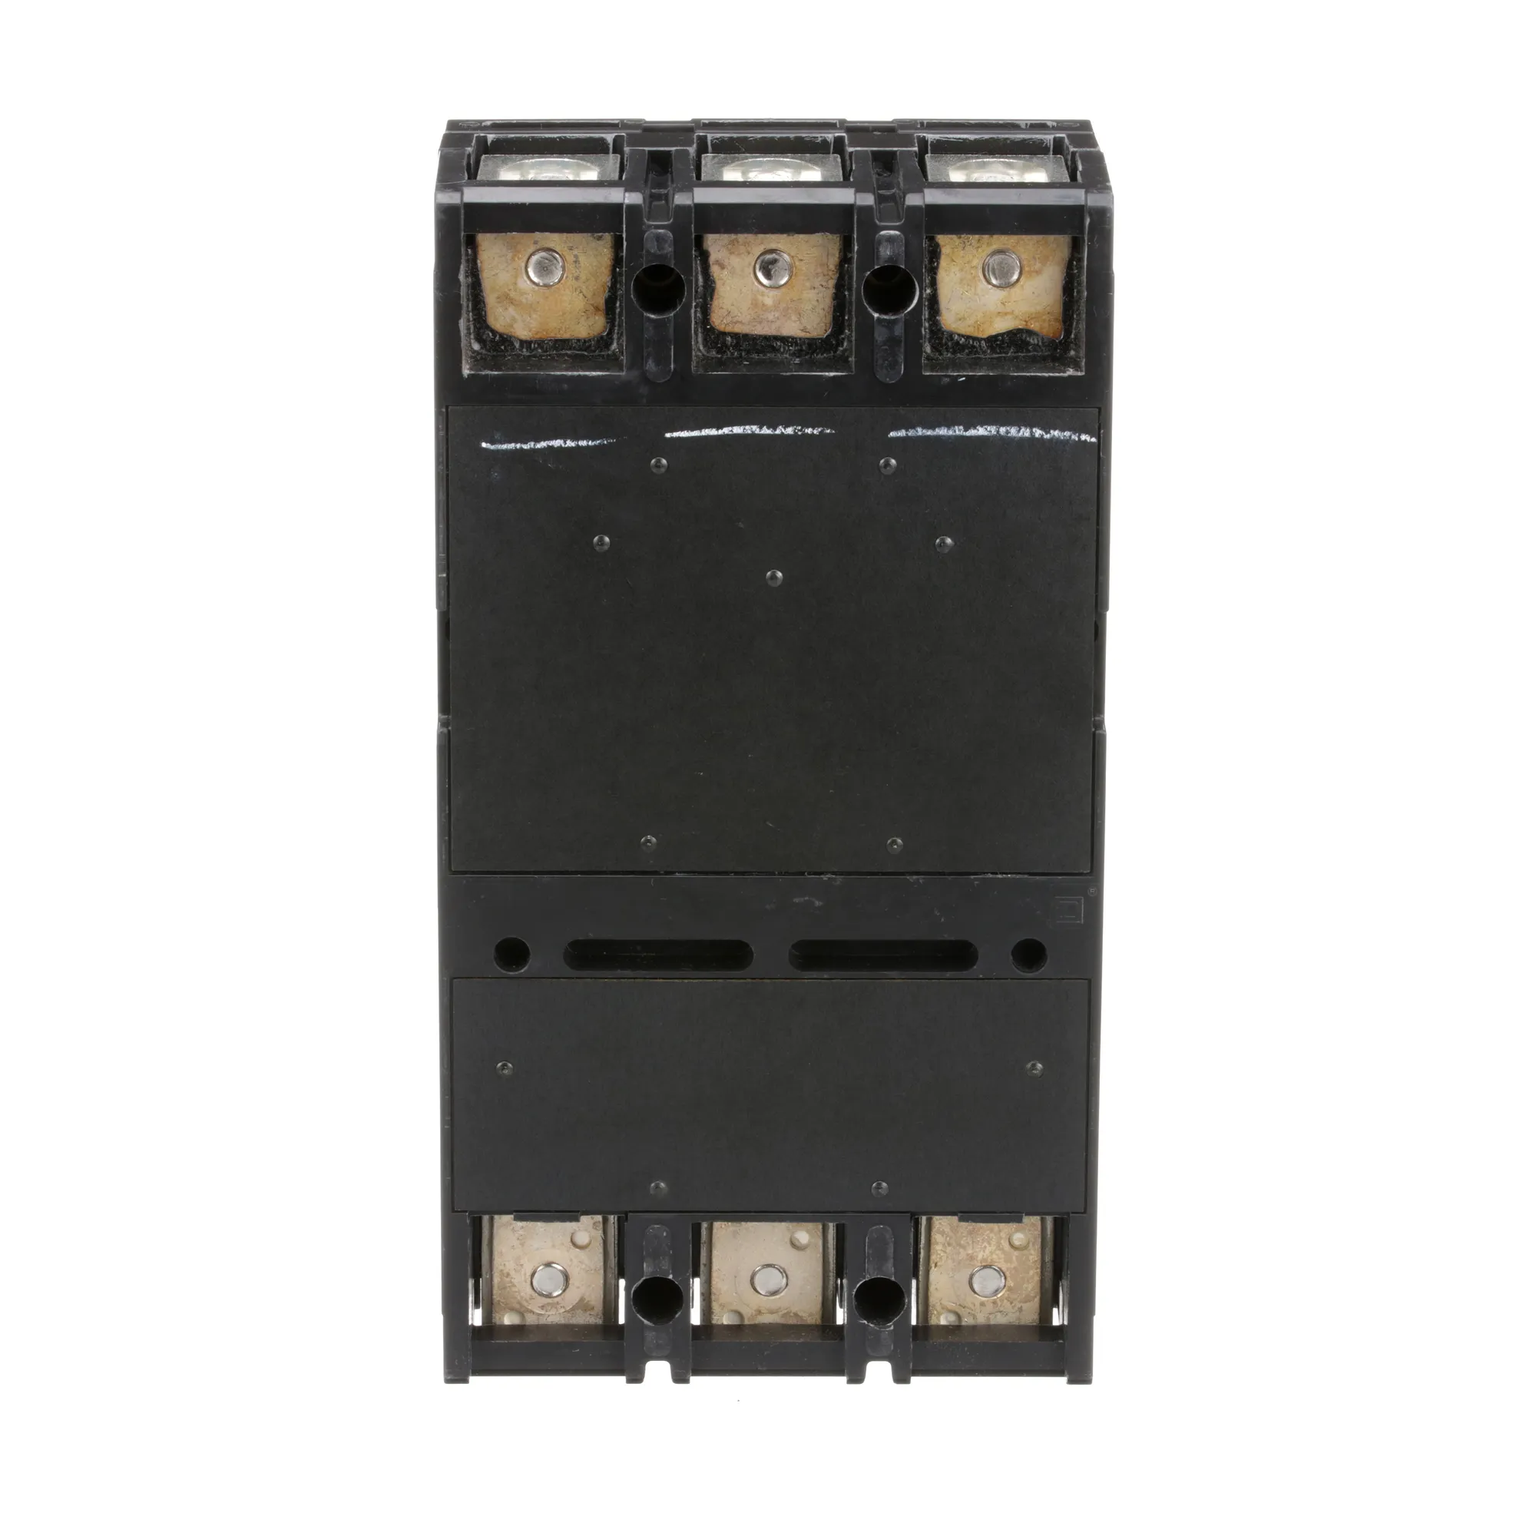 LAL36400 - Square D - Molded Case Circuit Breaker